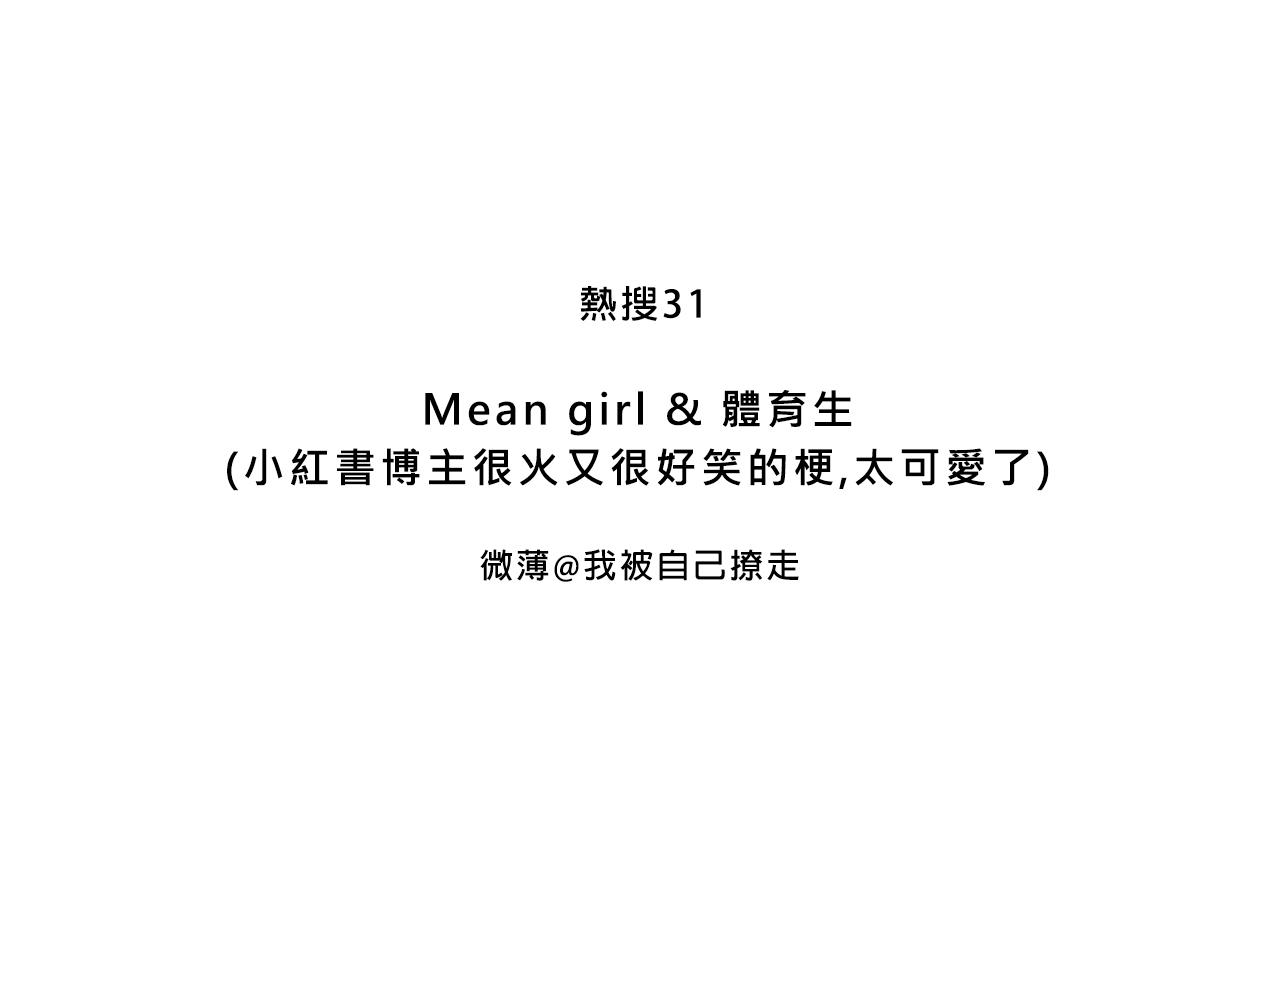 Mean girls富家女又甜又茶 - Mean girl &體育生 - 3